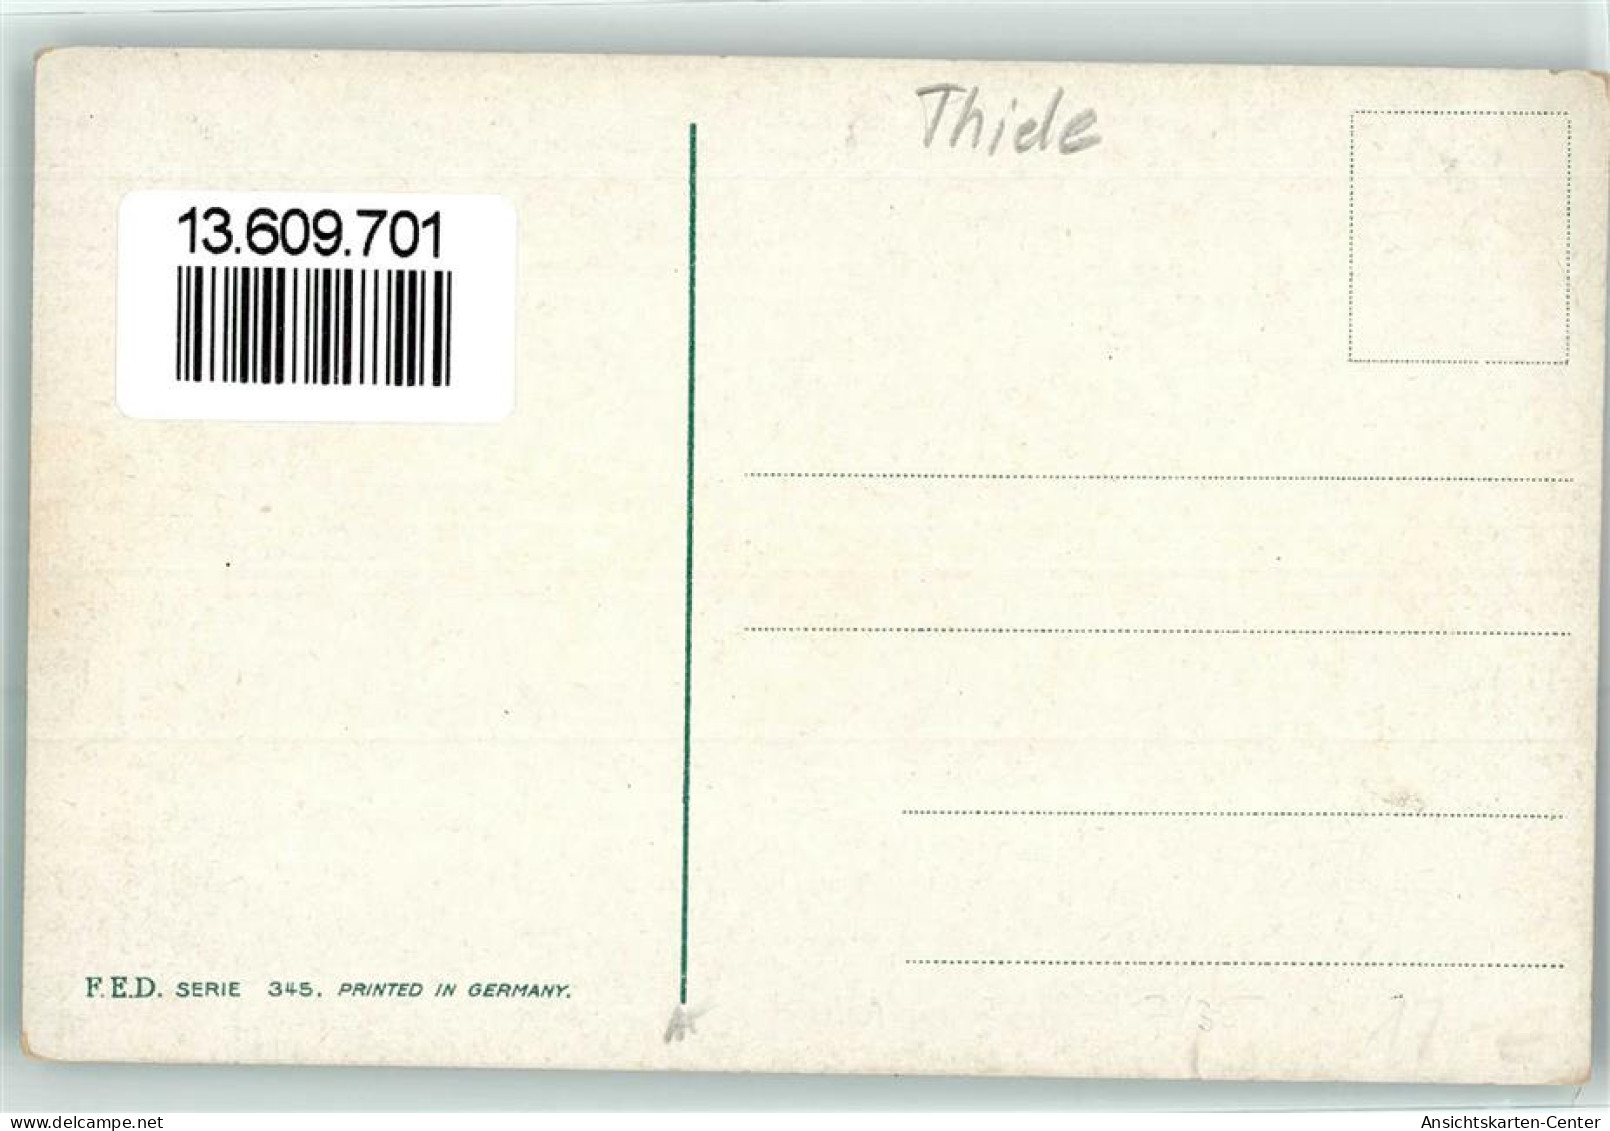 13609701 - Bademode  Humor  F.E.D. Serie 345 - Thiele, Arthur